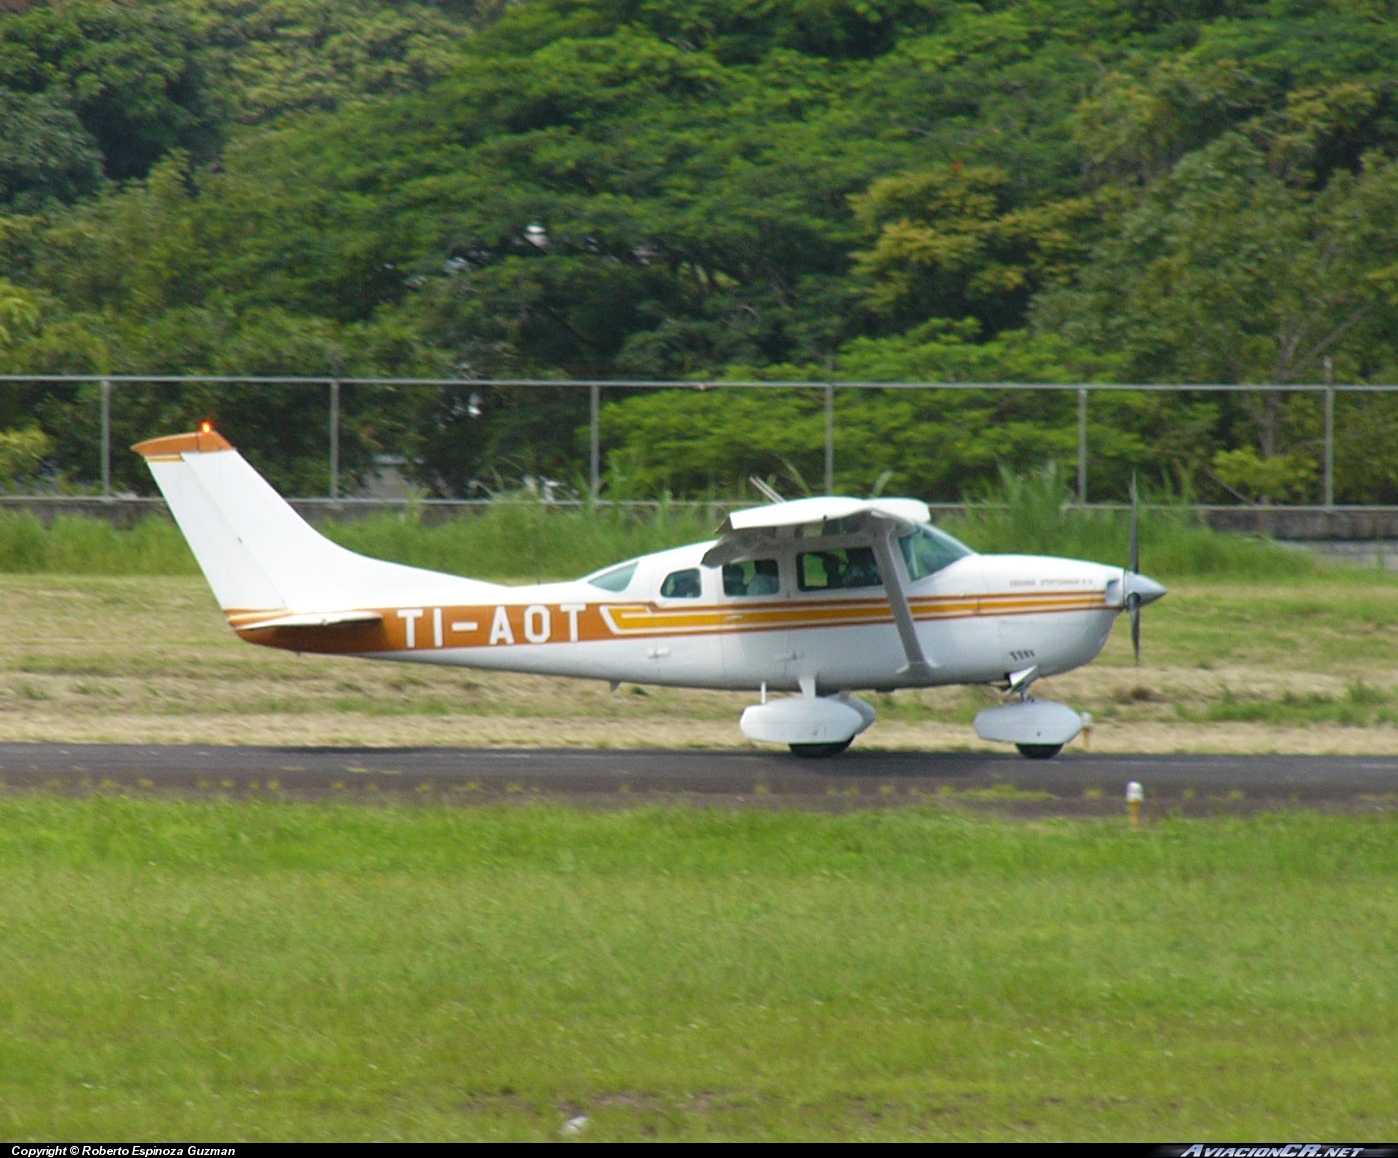 TI-AOT - Cessna 206 - Desconocida